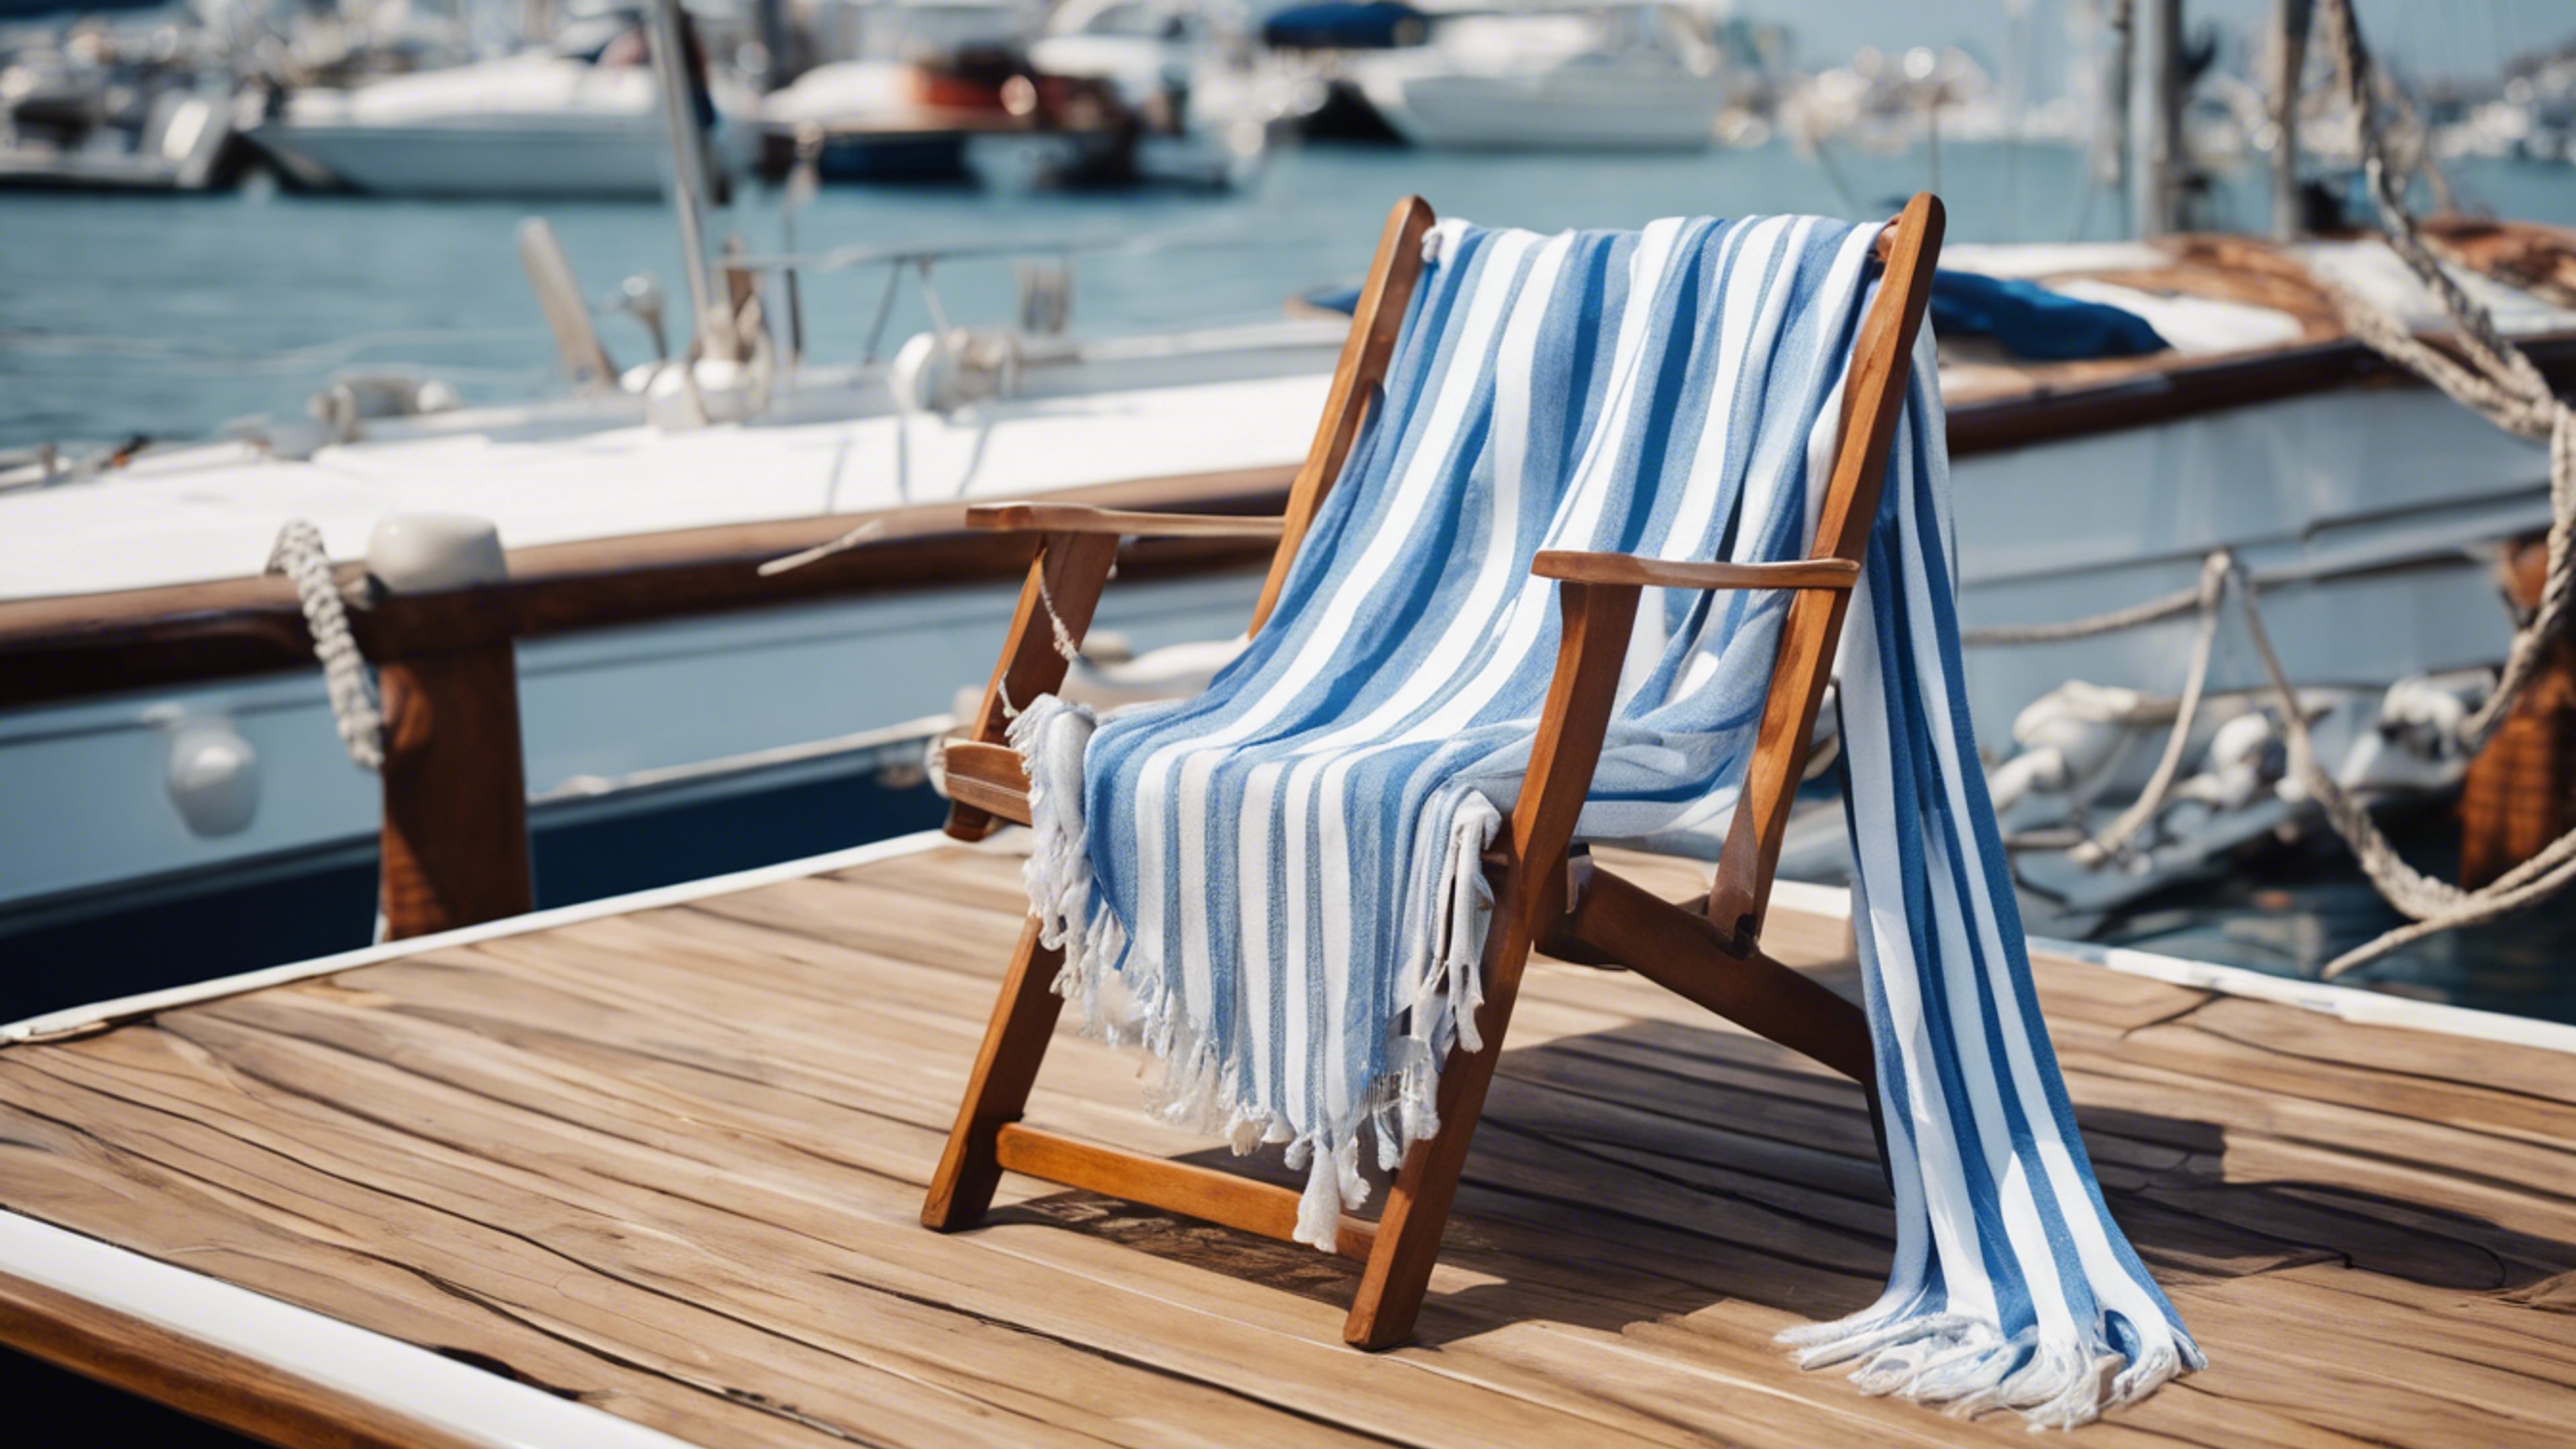 Preppy blue and white striped shawl draped over a teak deck chair on a sailboat. ផ្ទាំង​រូបភាព[8e59a438a9aa4e06a25d]